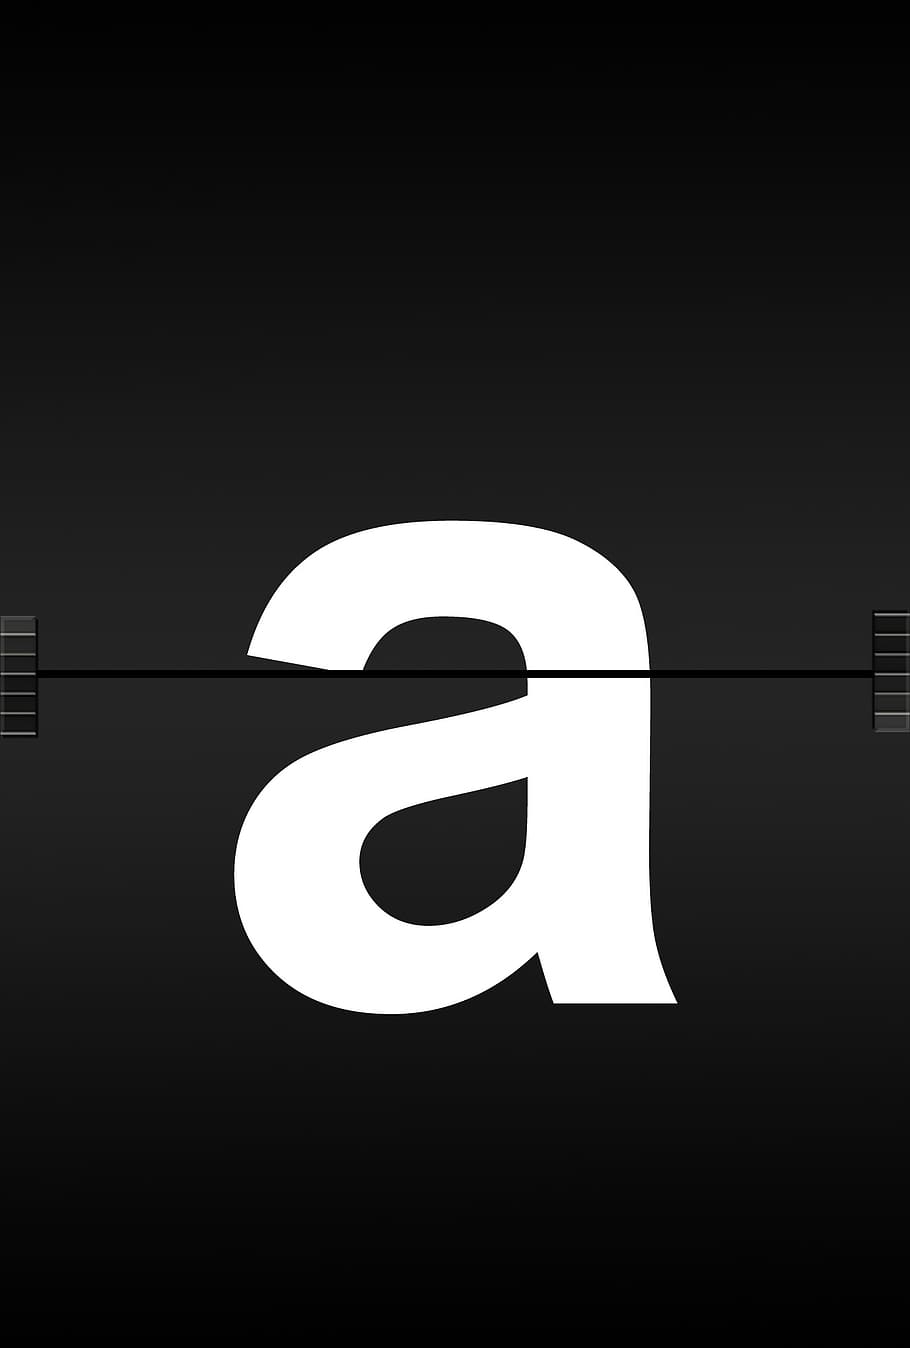 amazon logo, letters, abc, alphabet, journal font, airport, scoreboard, ad, railway station, board